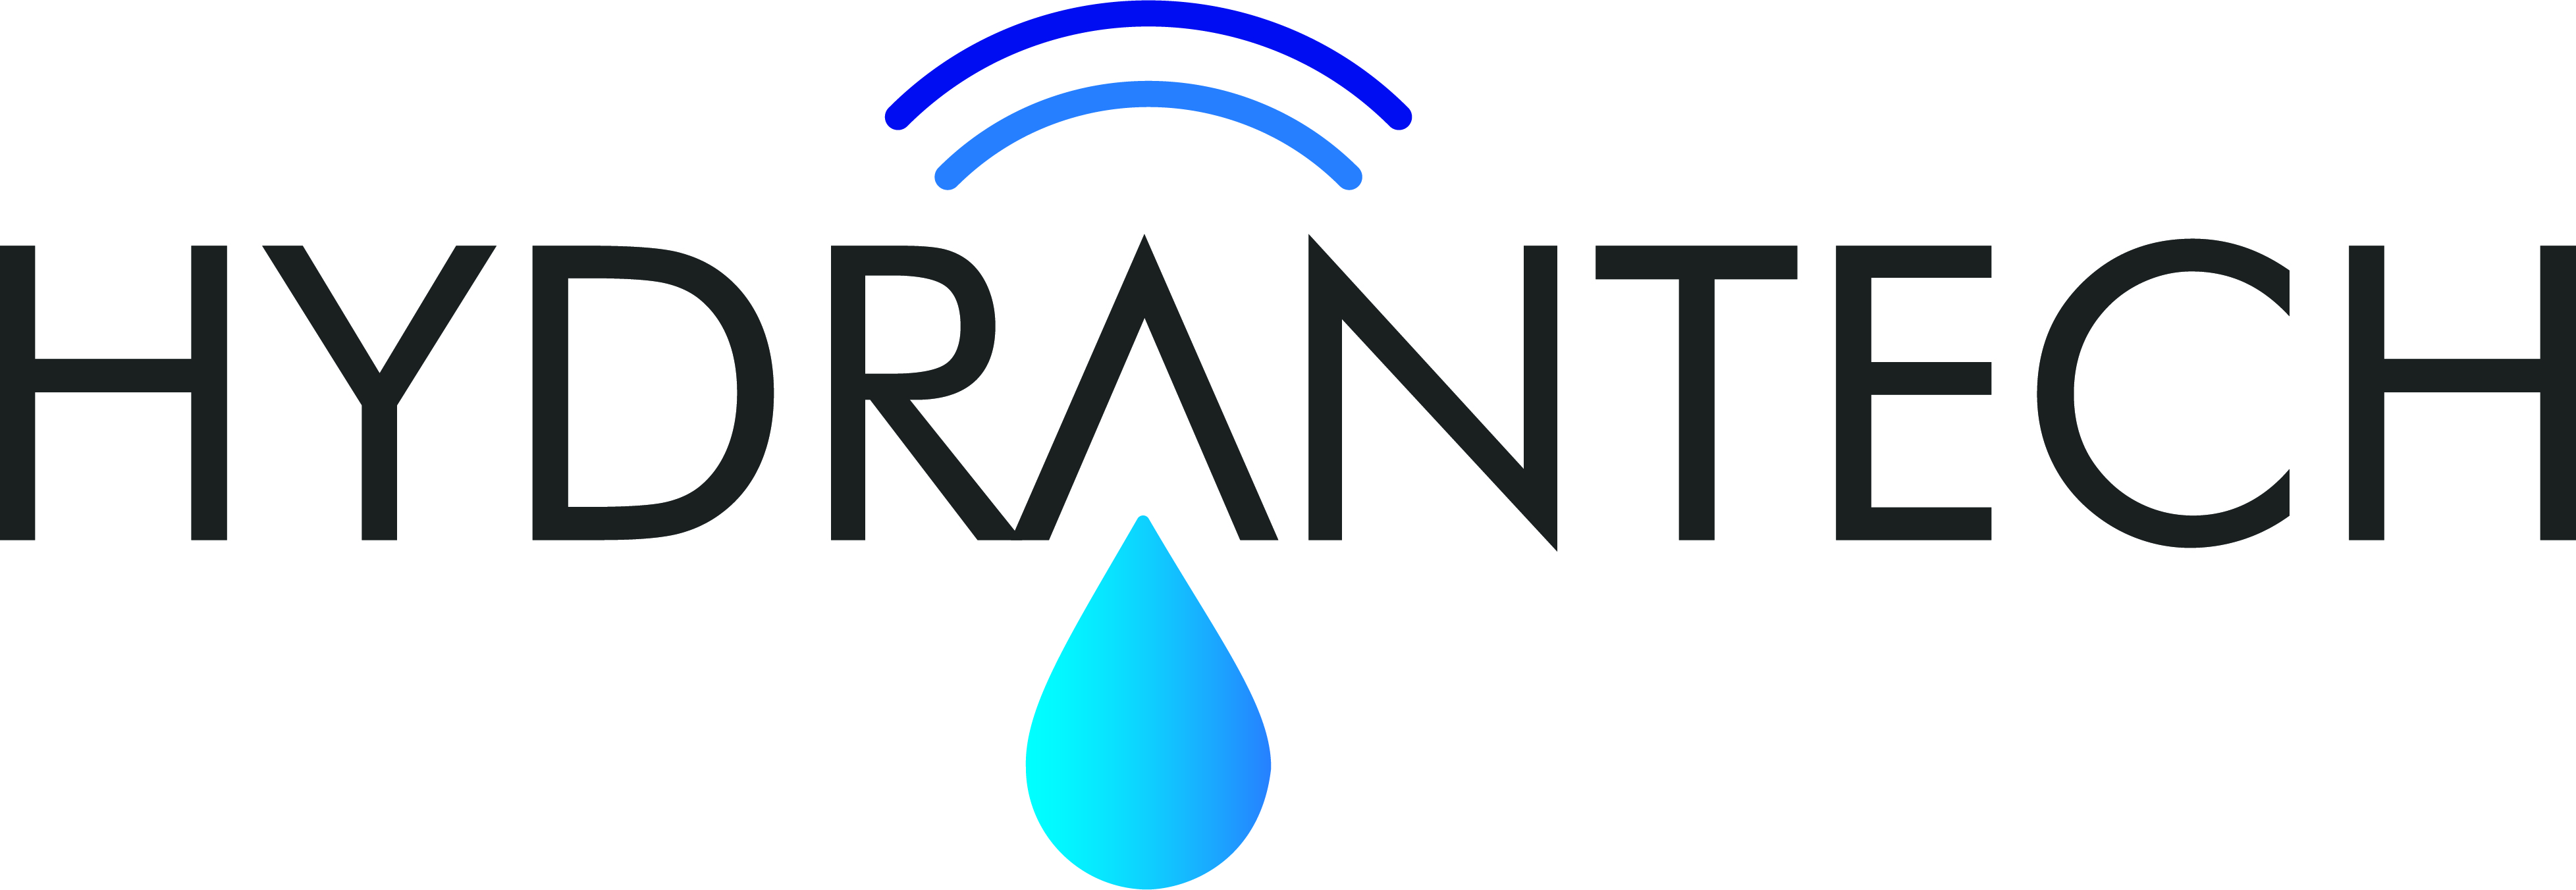 Hydrantech logo